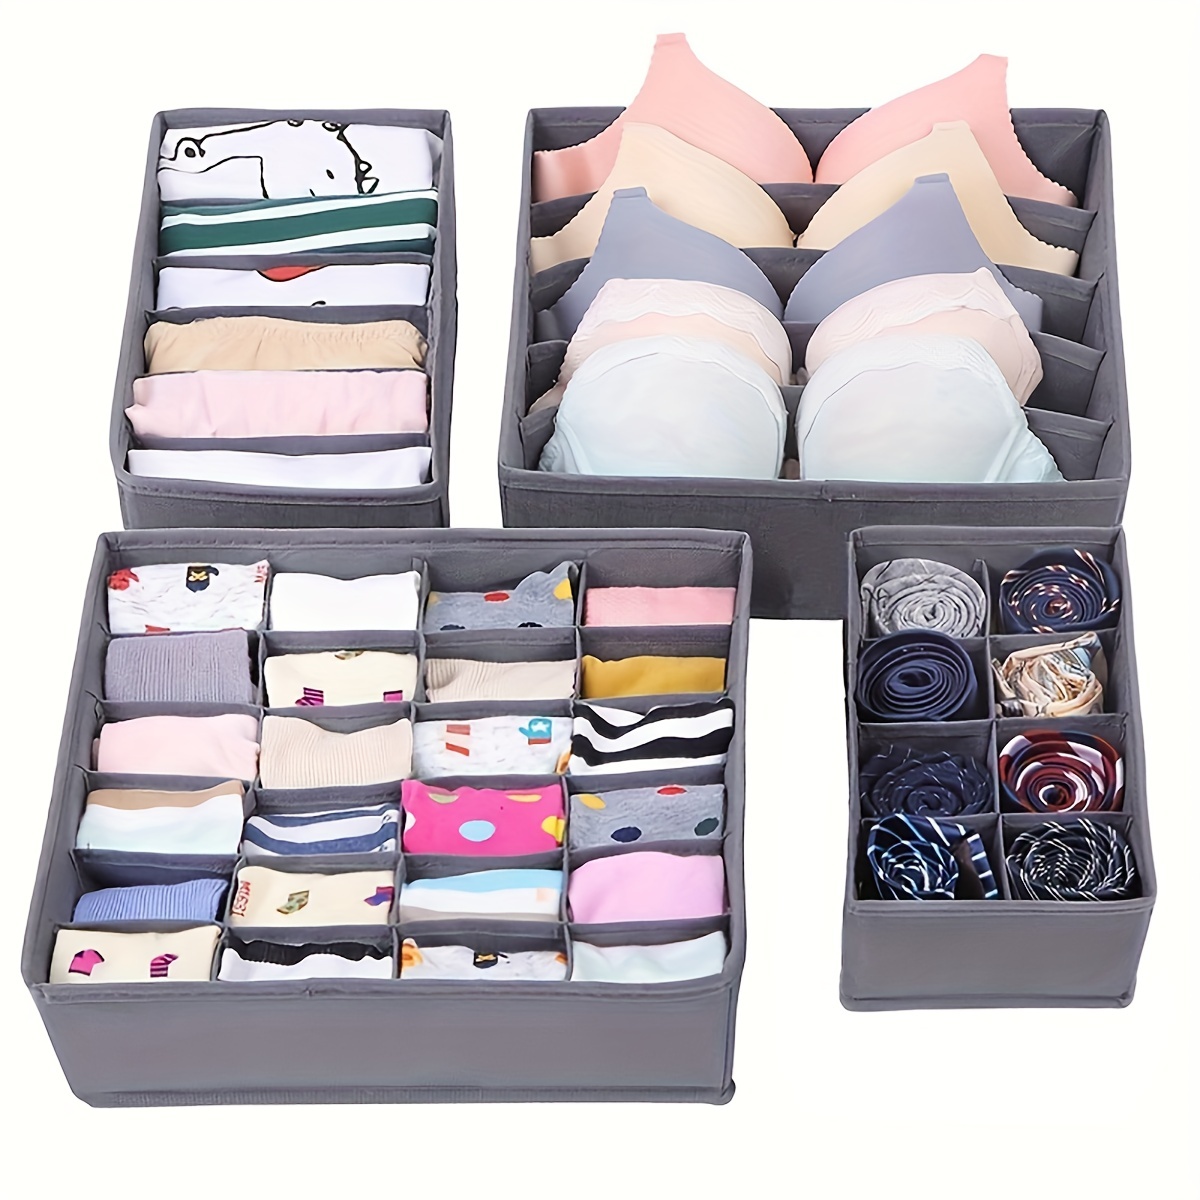 4 Pcs Drawer Organizer For Underwear, Bras, Socks And Lingerie